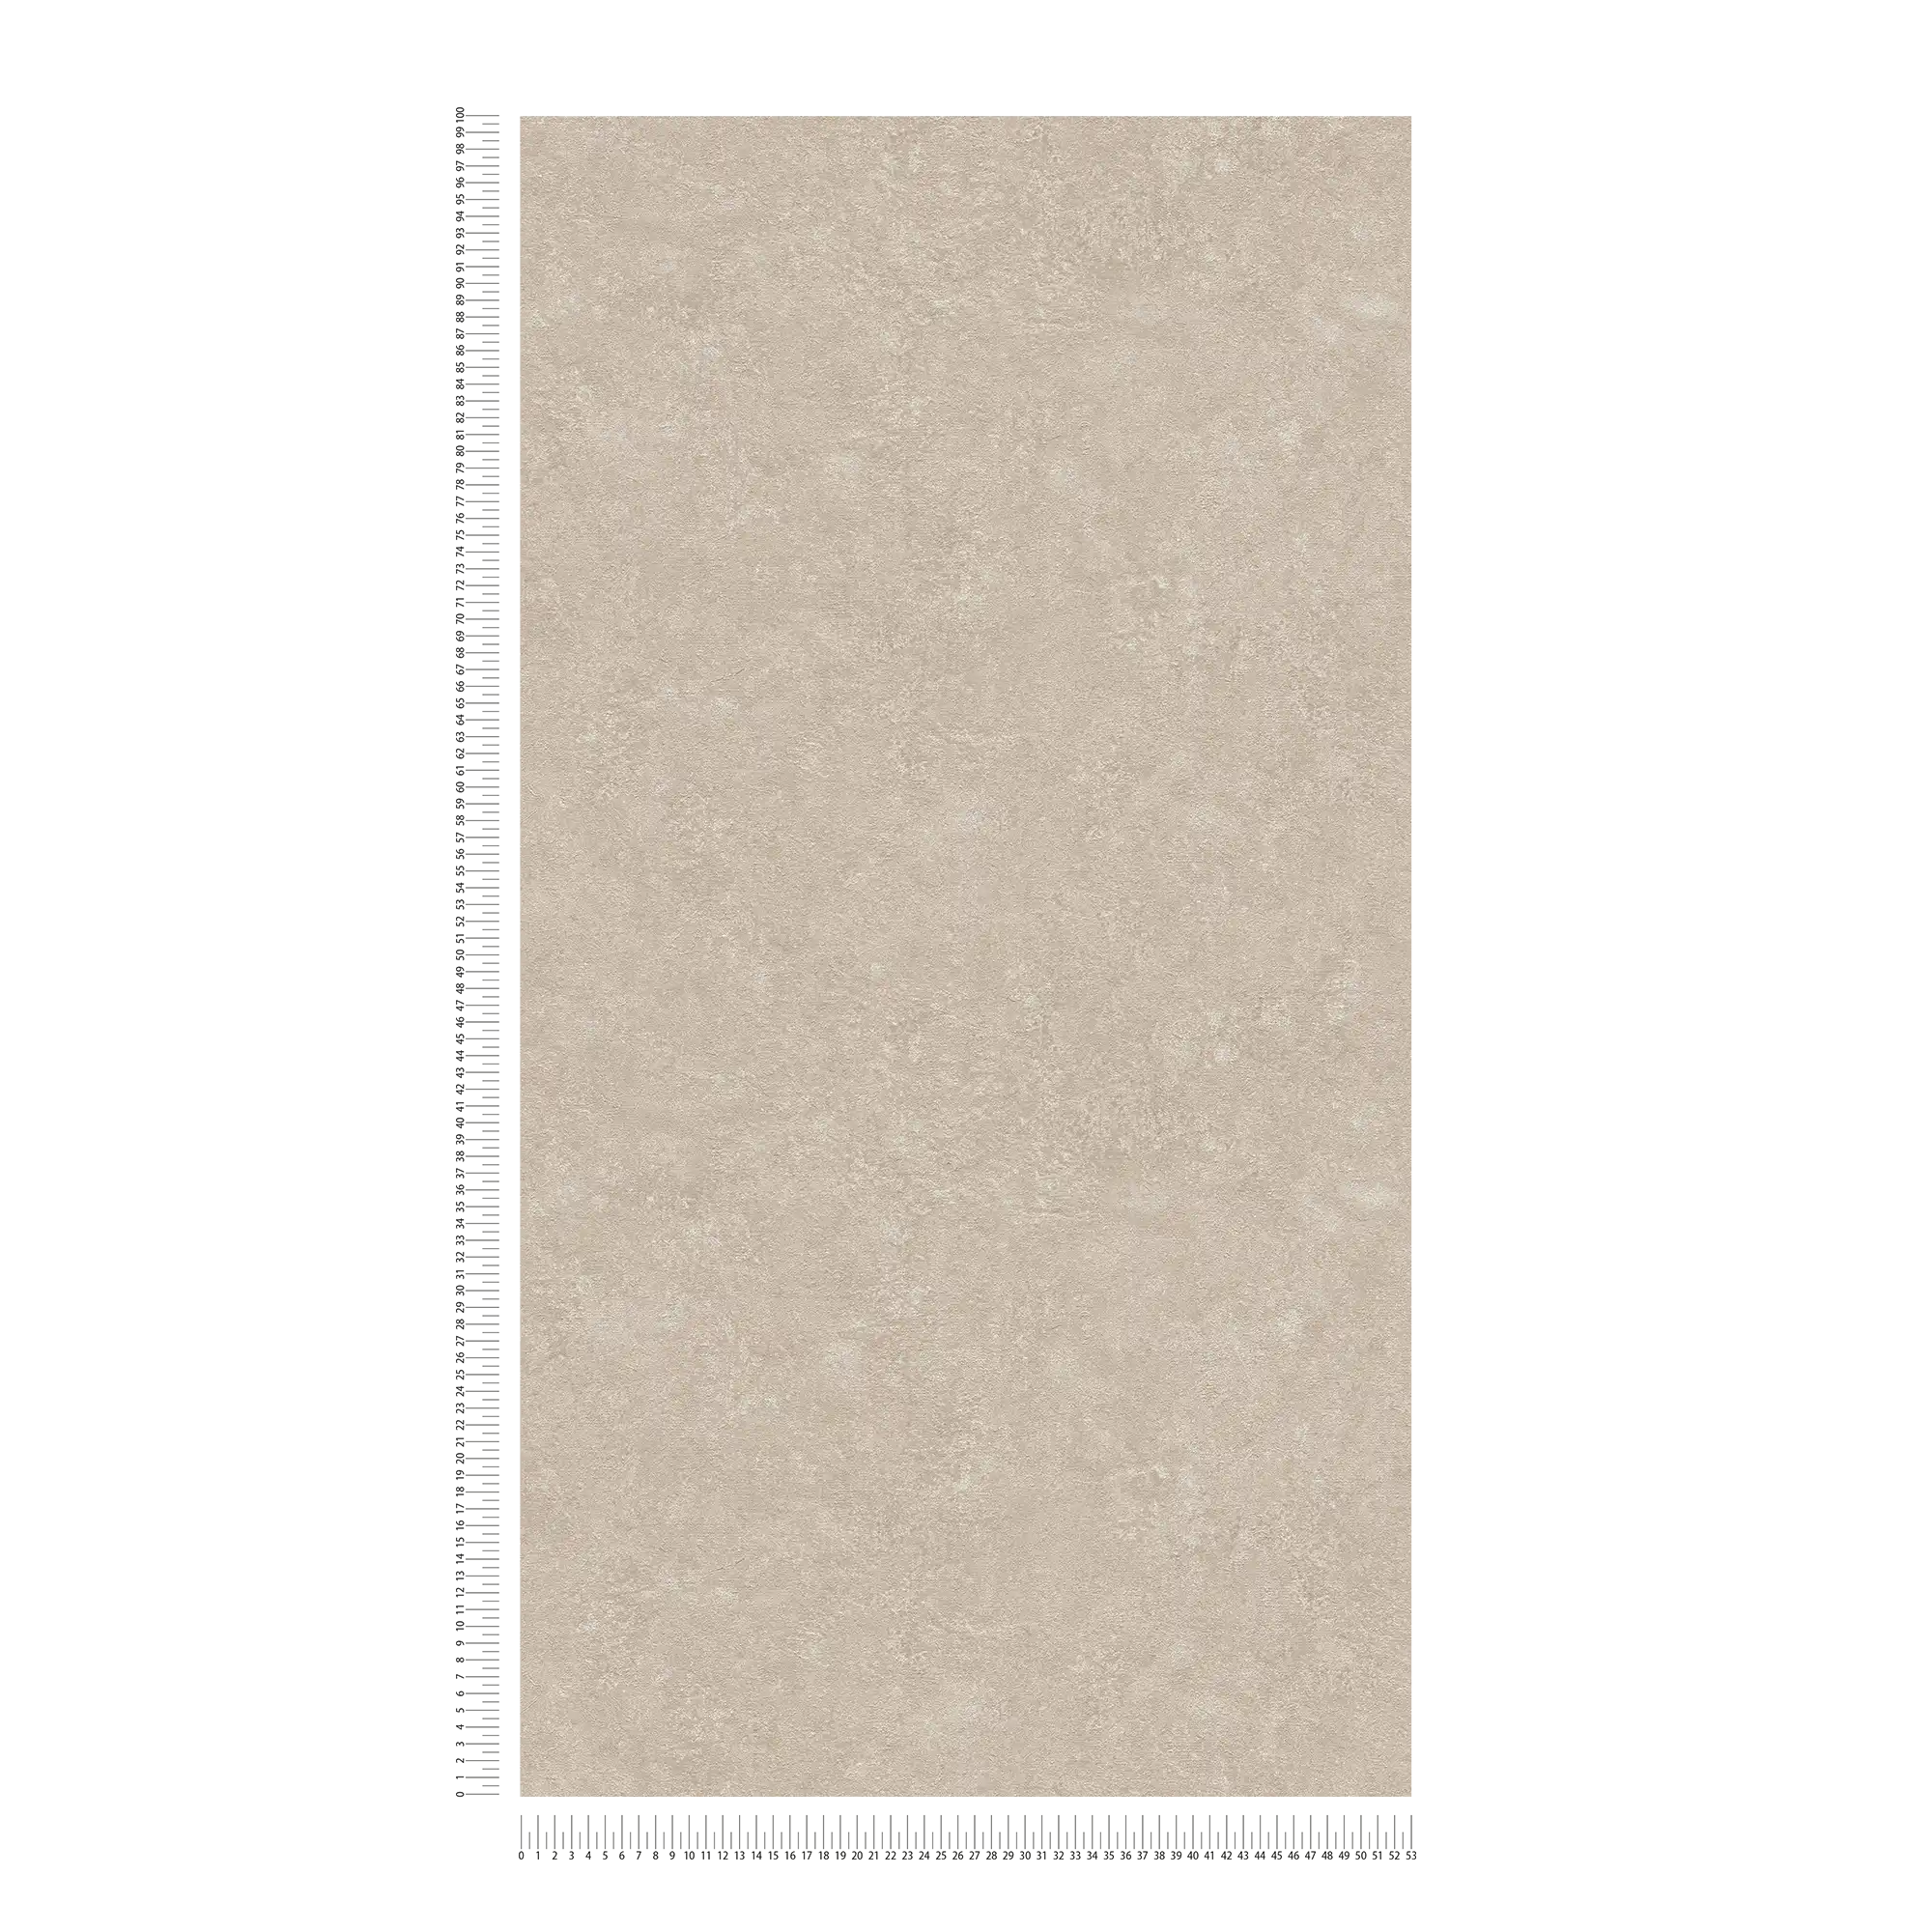             Wallpaper rough plaster look in industrial style - beige, white
        